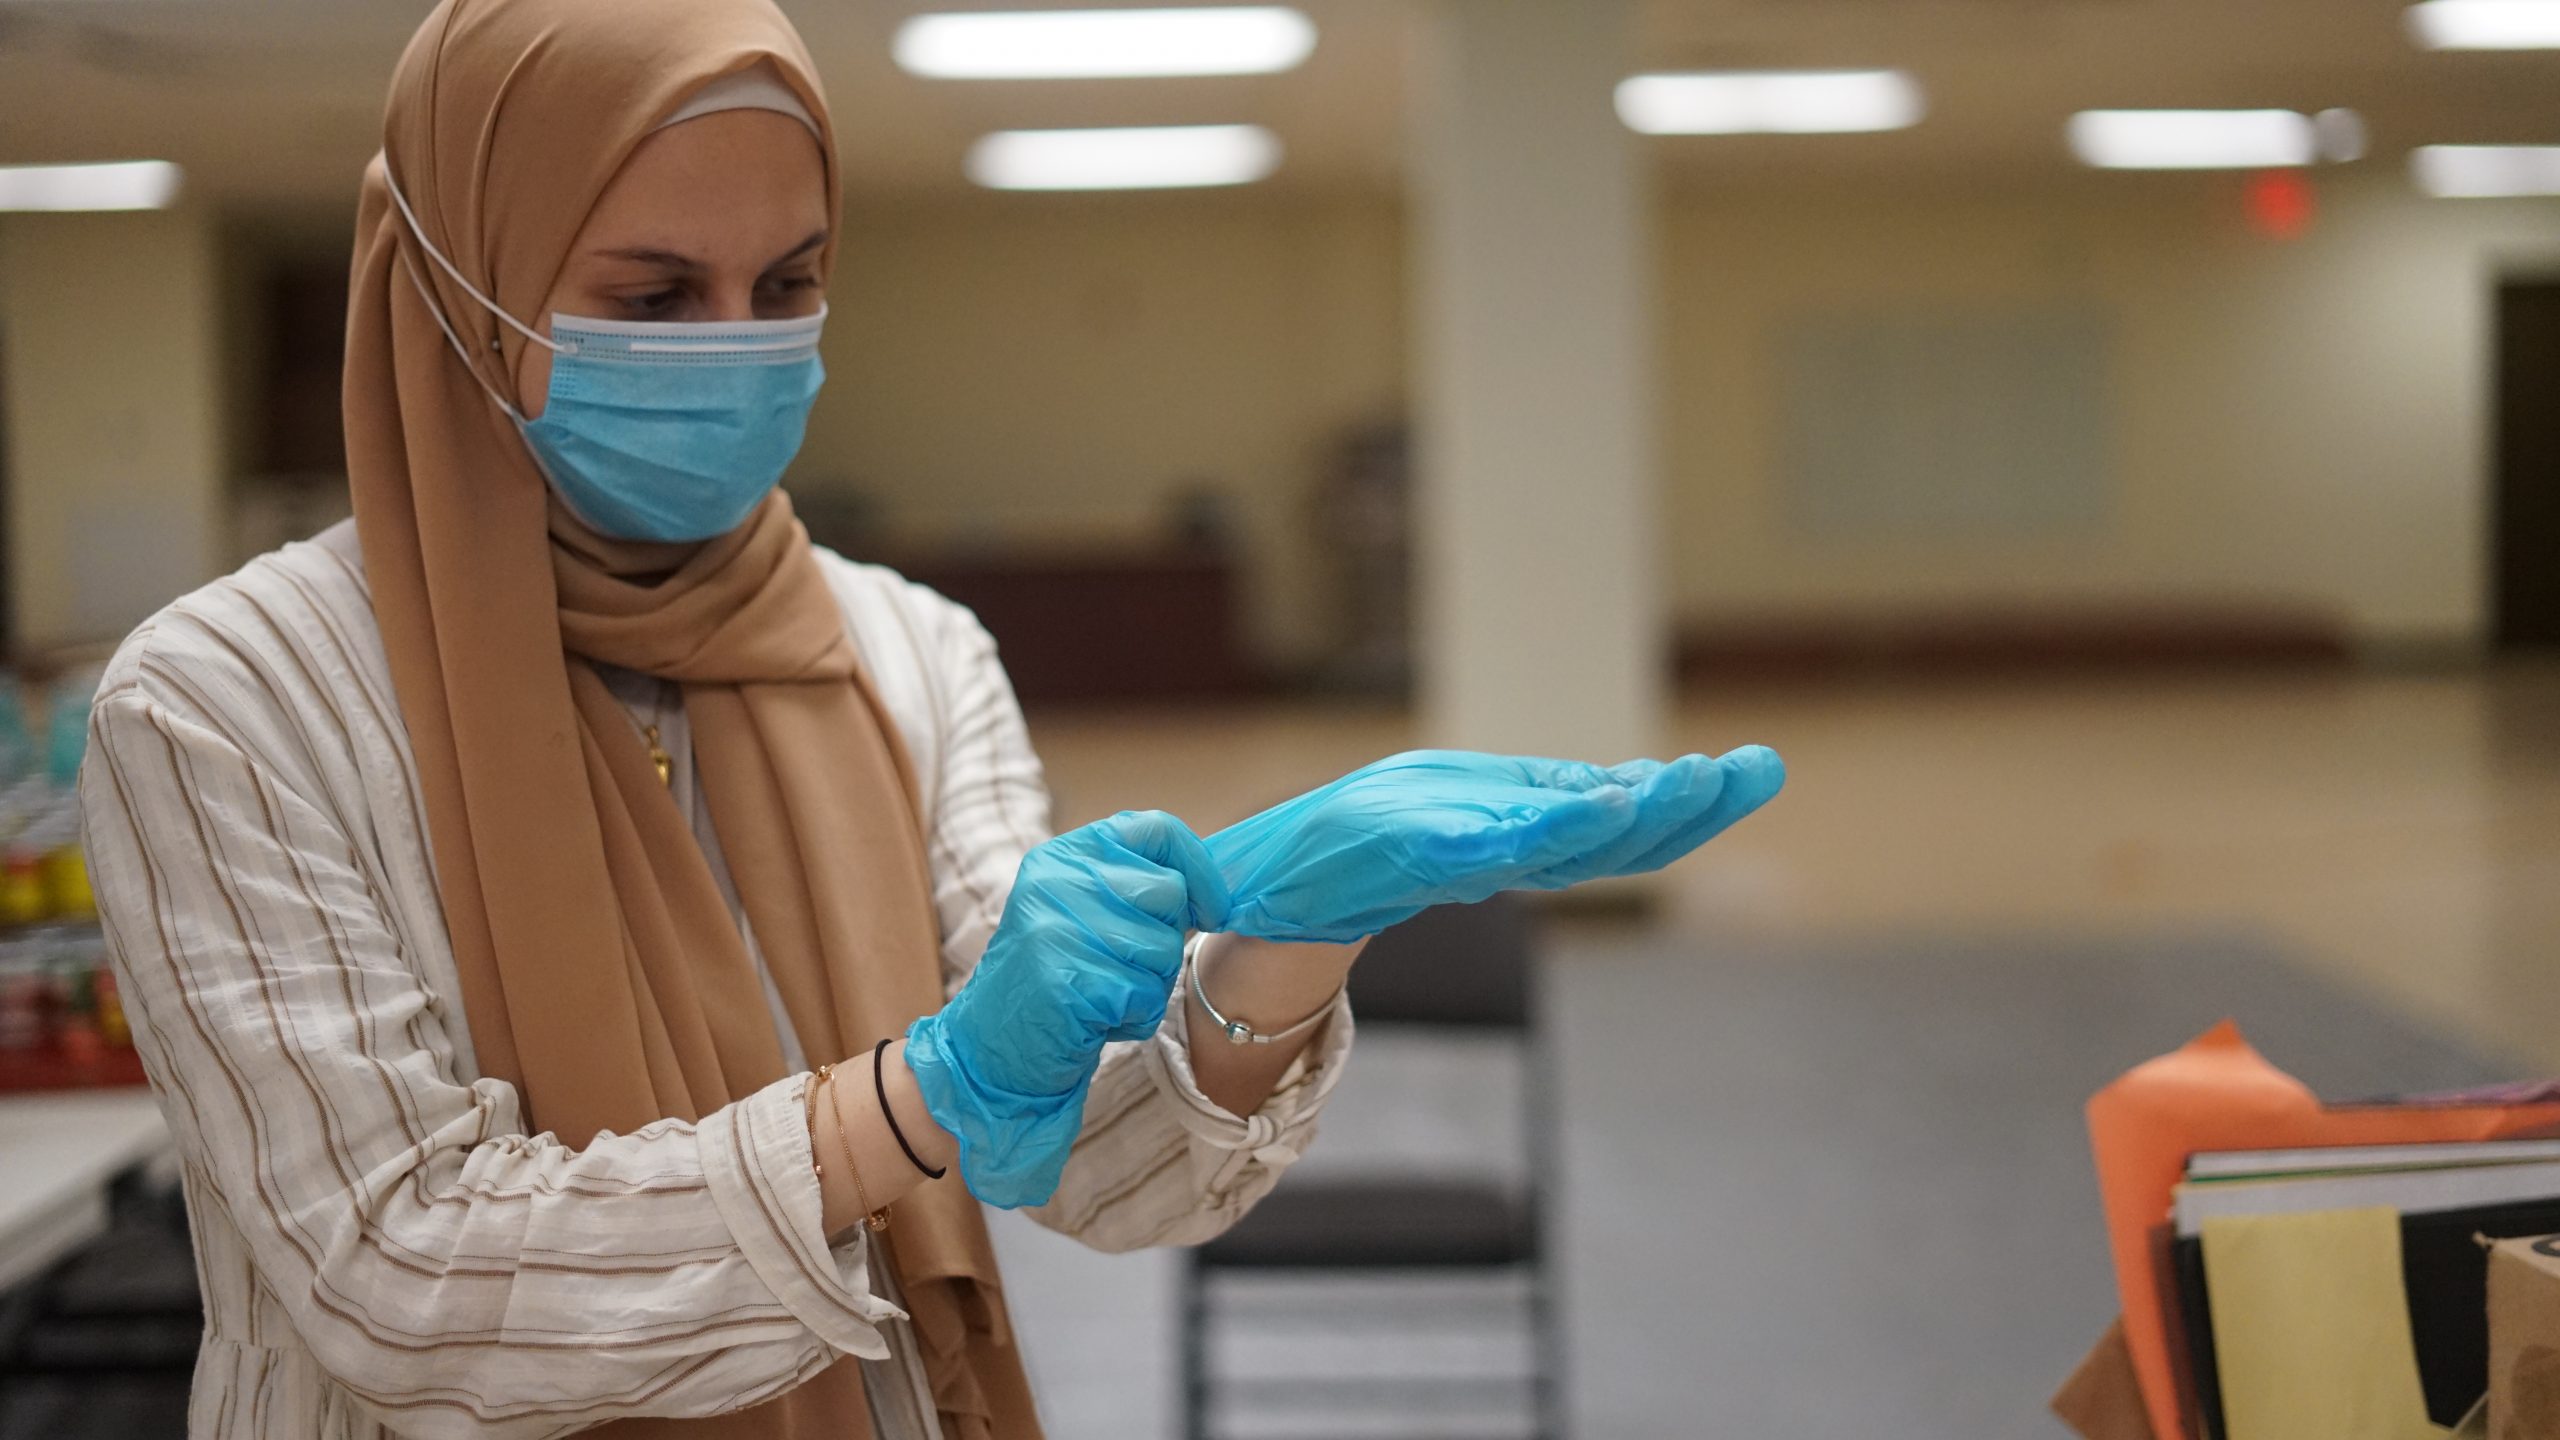 A volunteer puts on latex gloves